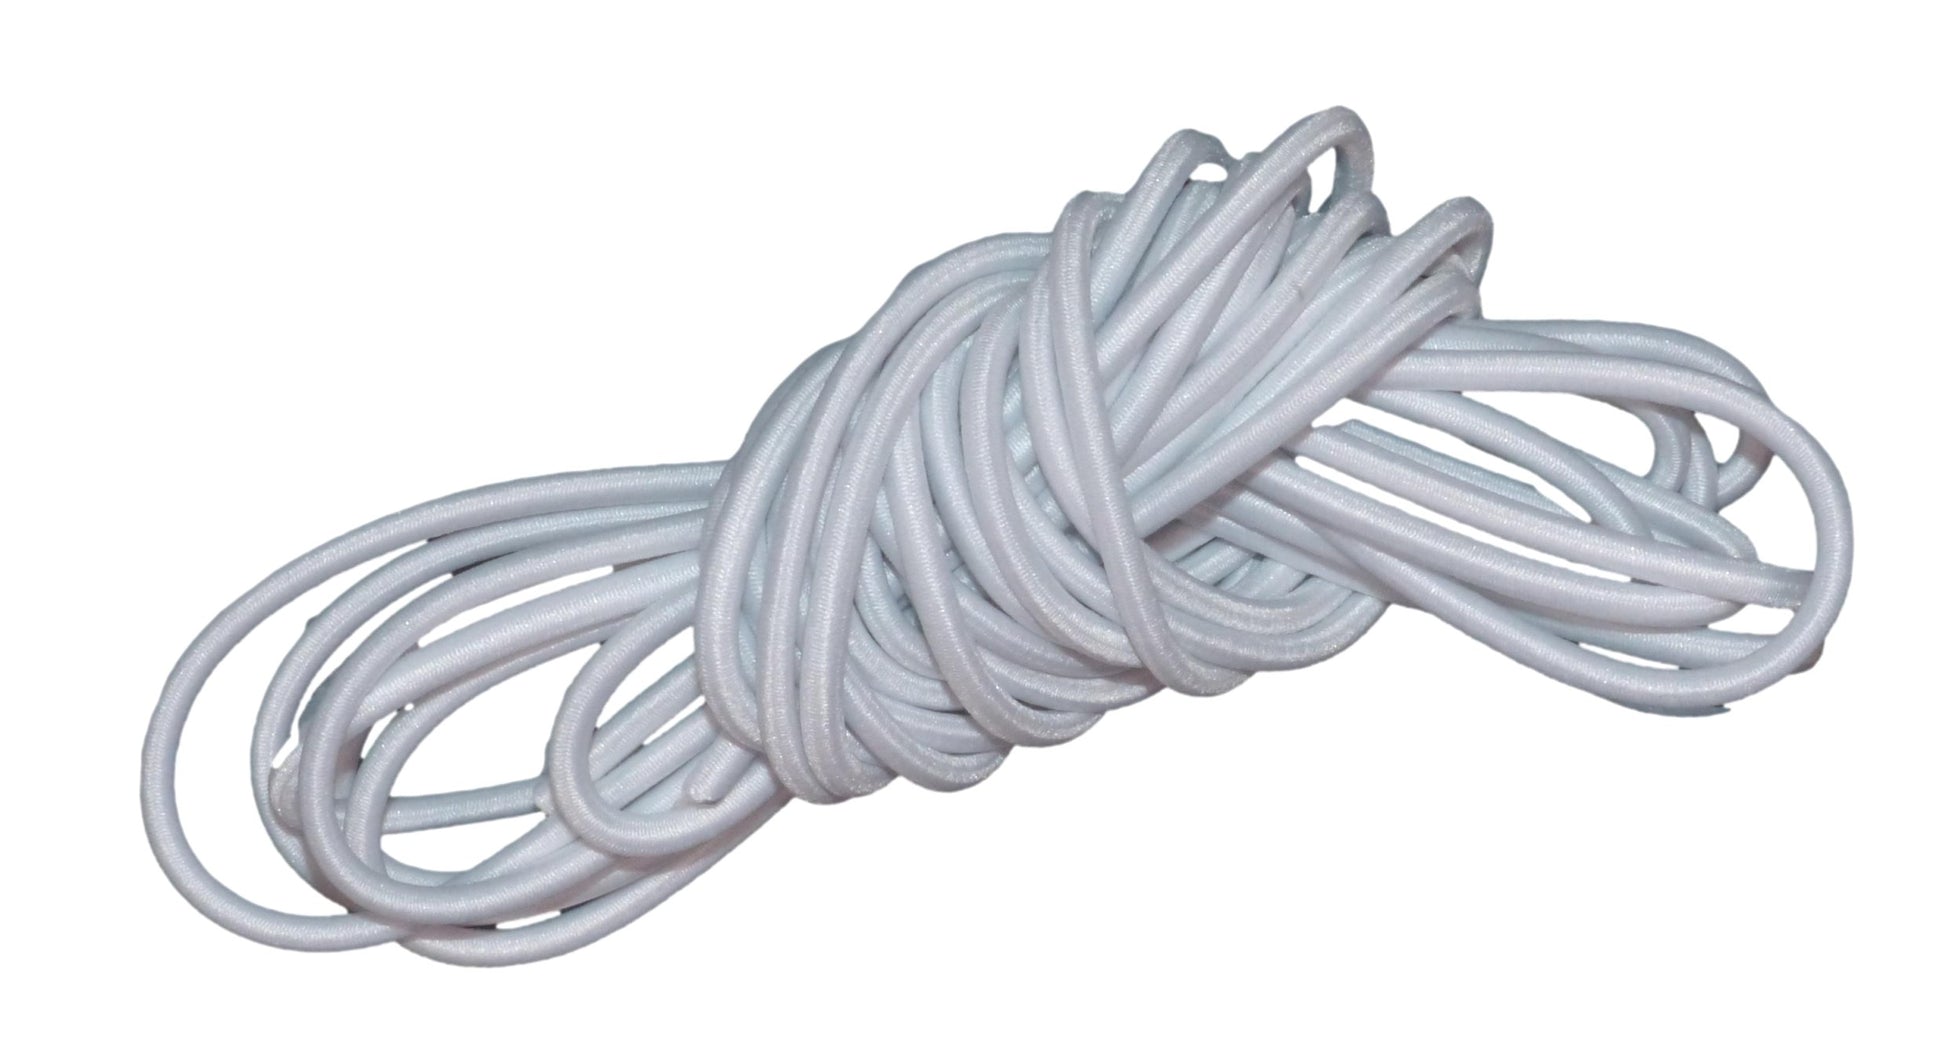 Benristraps 3mm shock cord in white, five metre roll